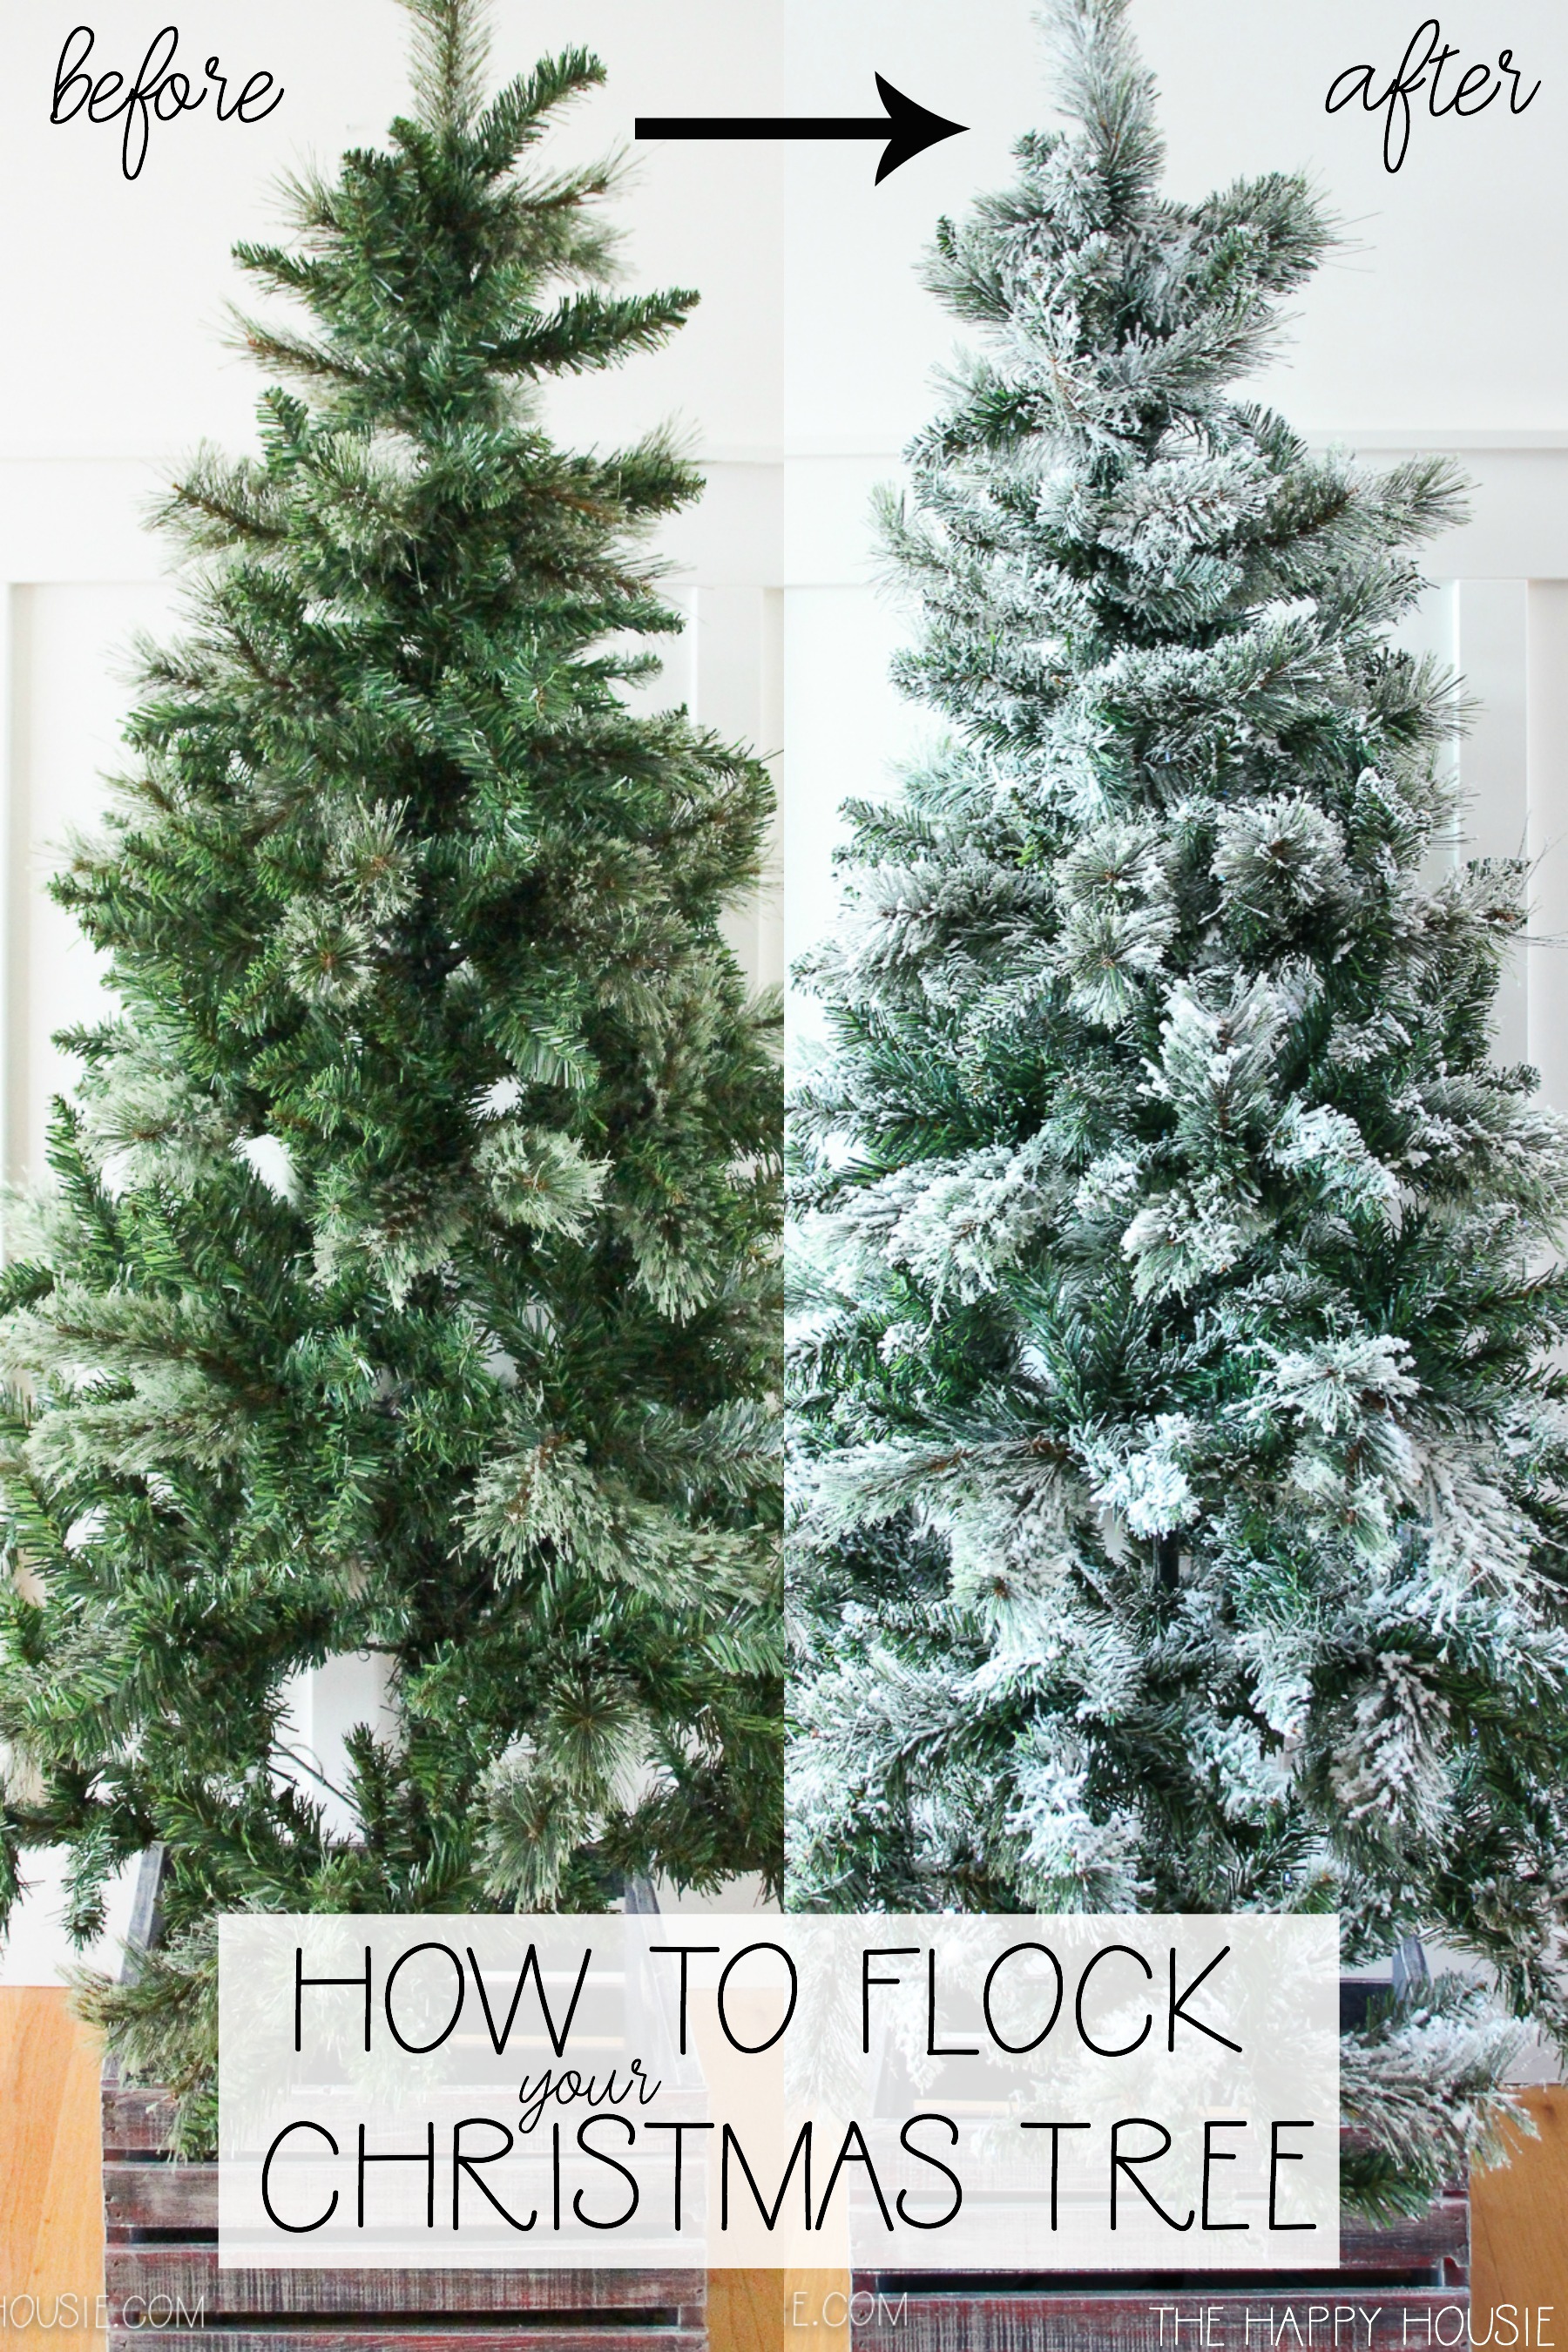 DIY FLOCKED CHRISTMAS TREE TUTORIAL